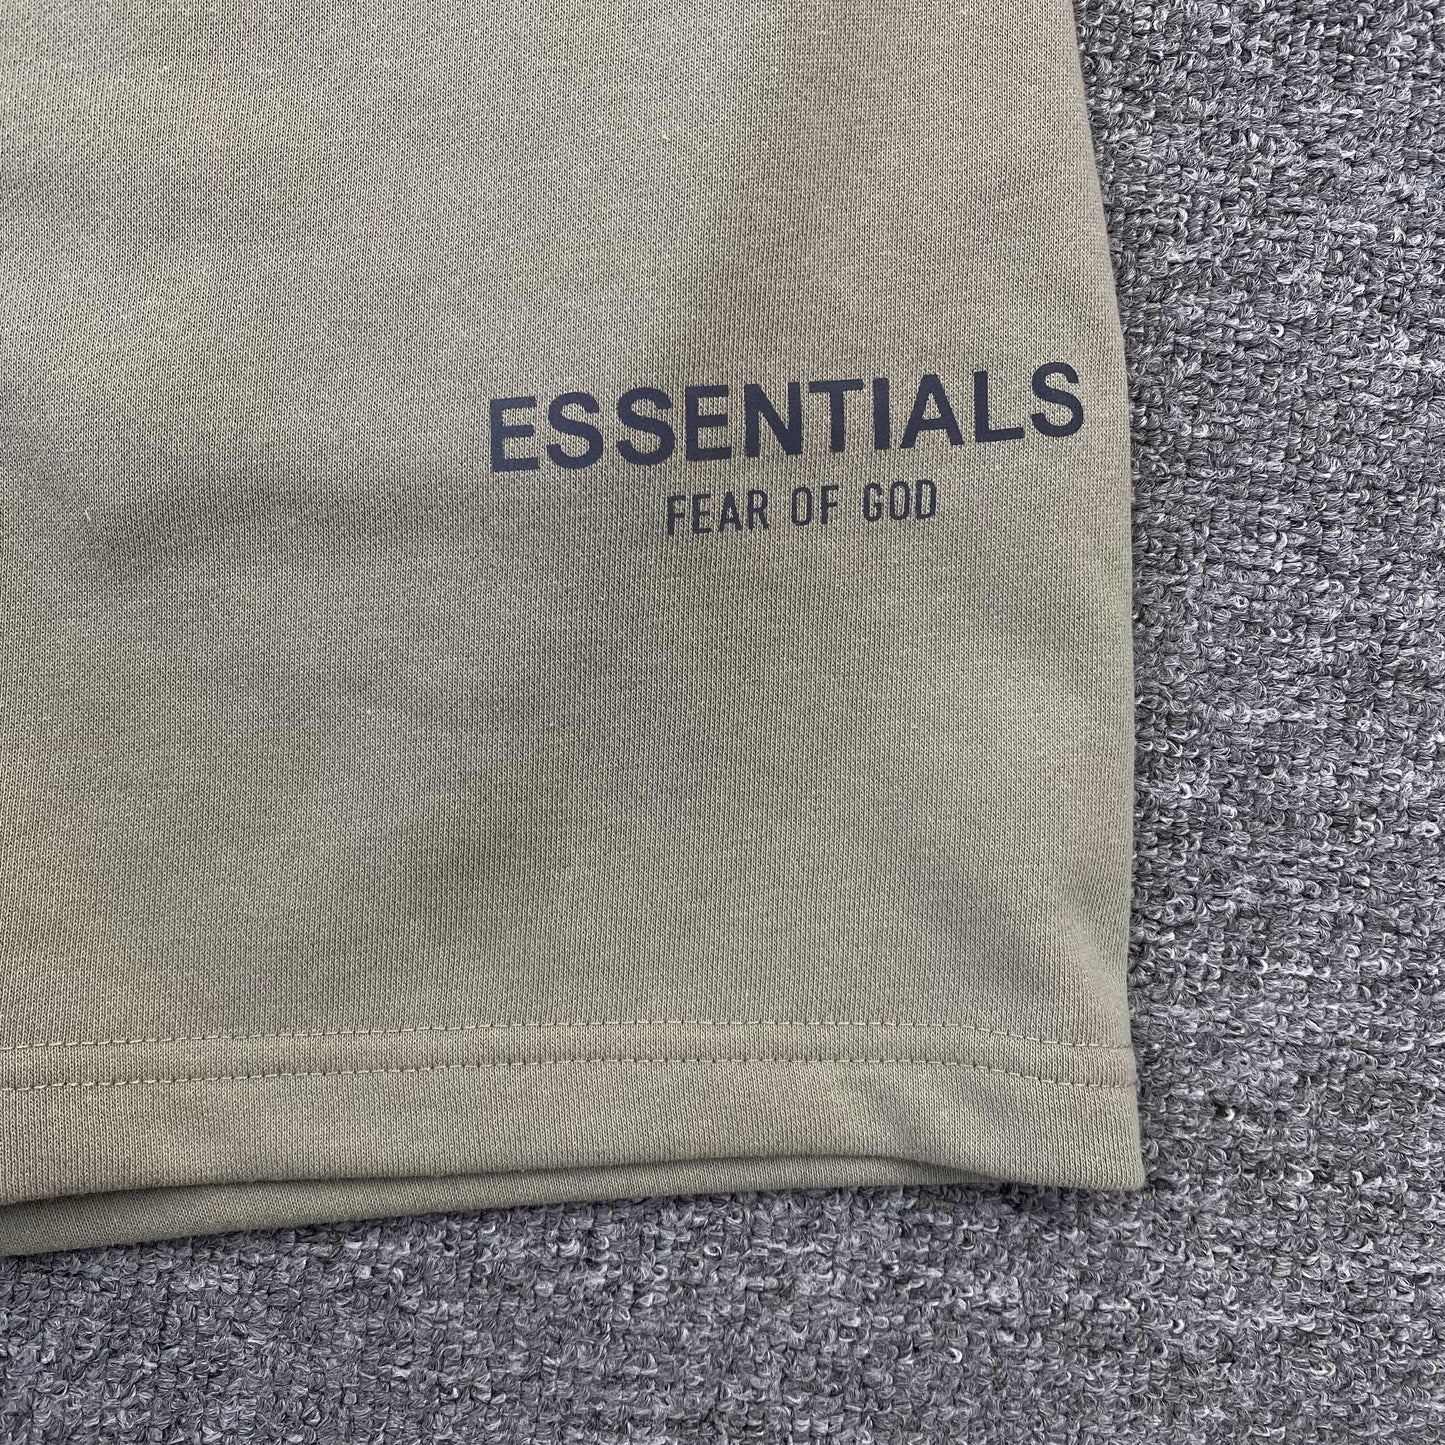 Fear of God Essentials Short 'White'